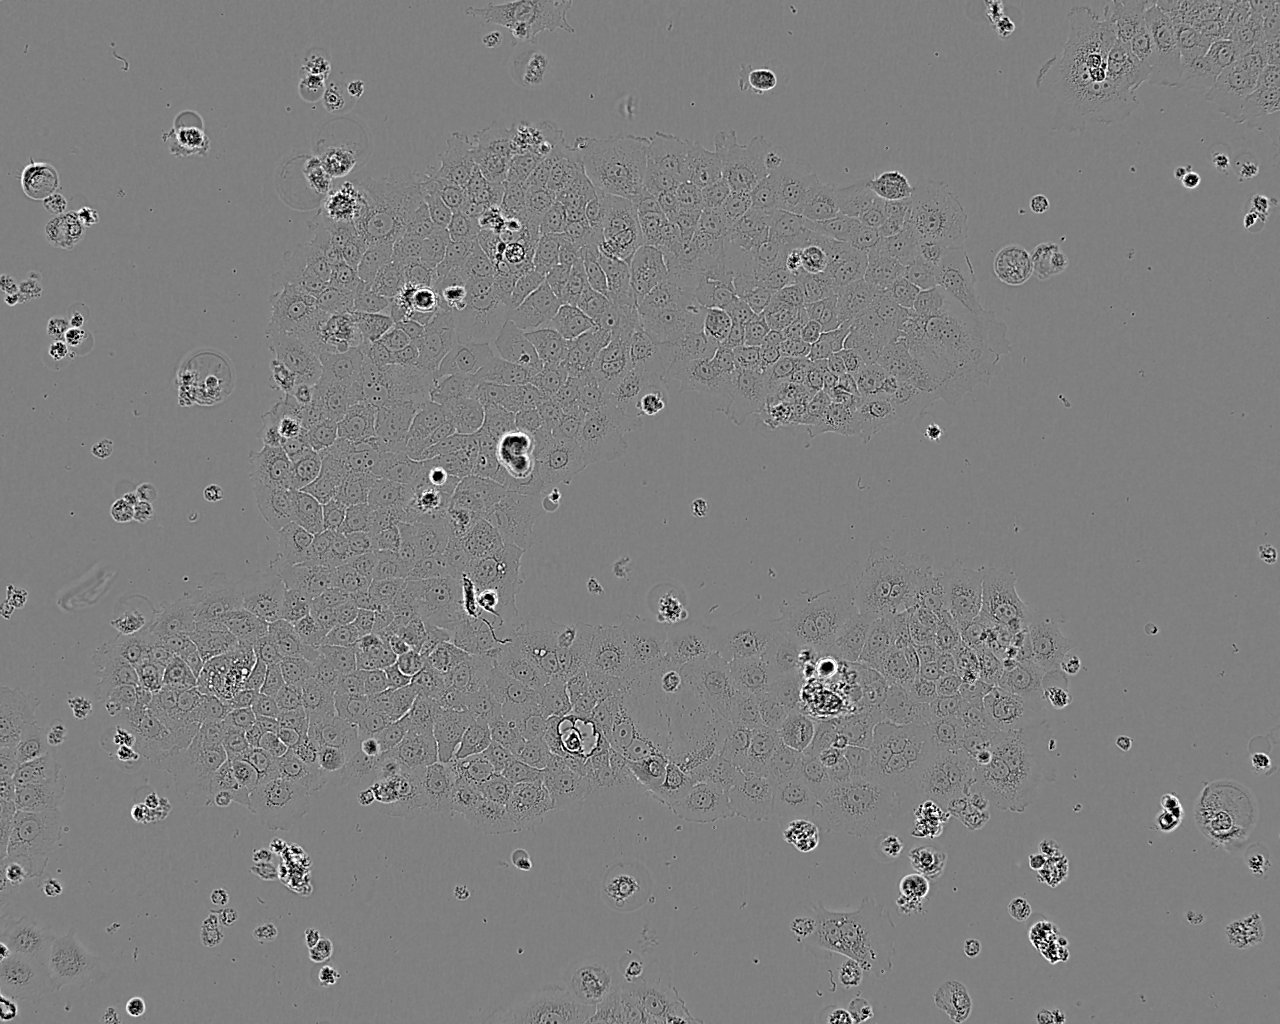 CHG-5 epithelioid cells人恶性胶质瘤细胞系